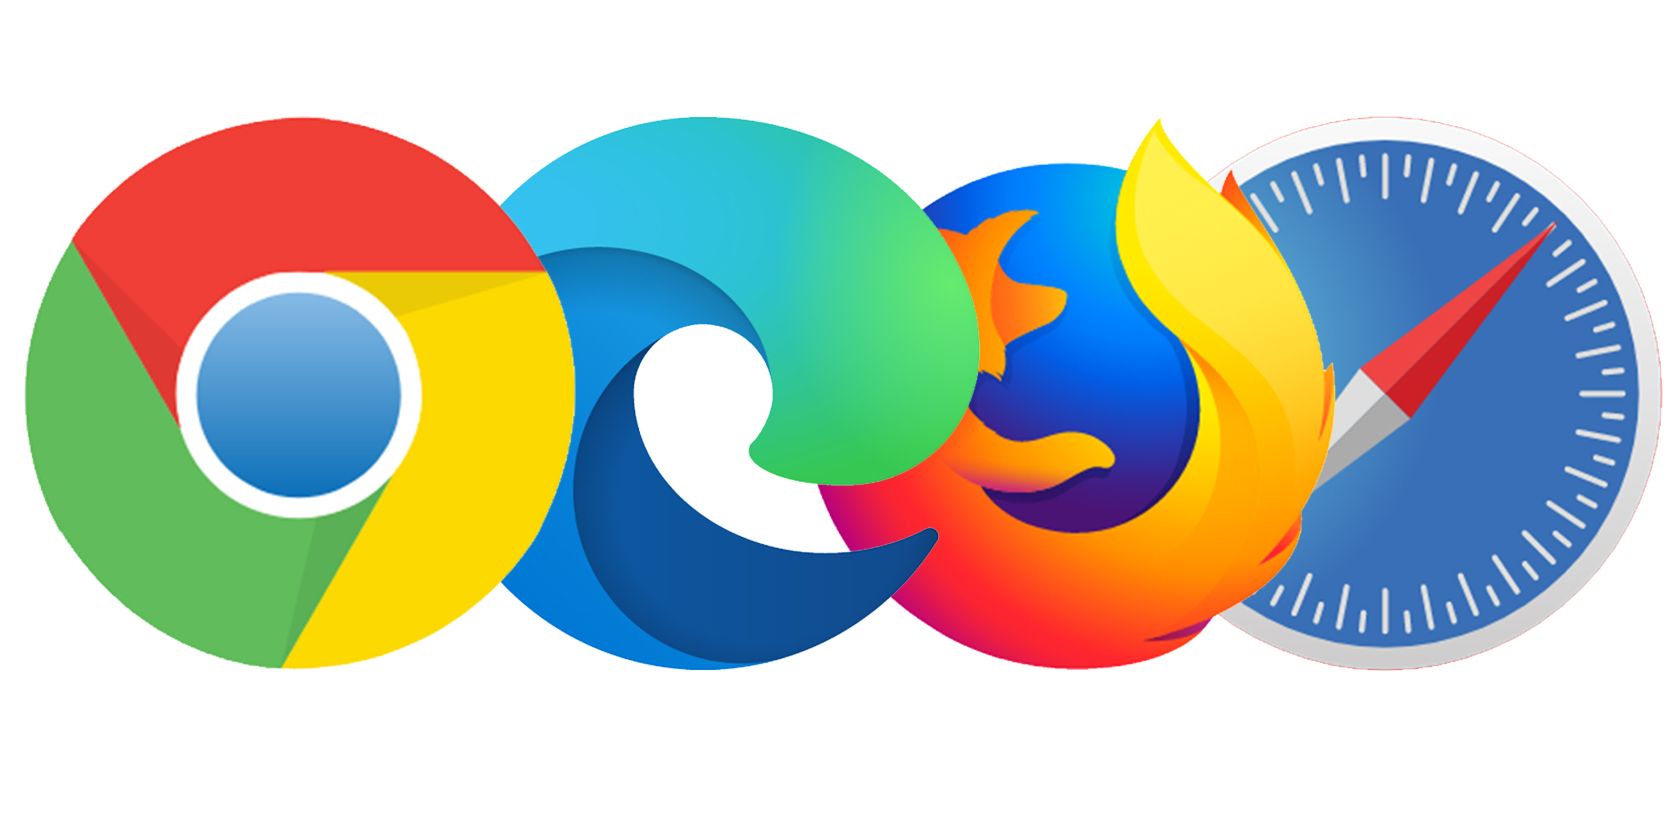 Chrome, Edge, Firefox and Safari logos